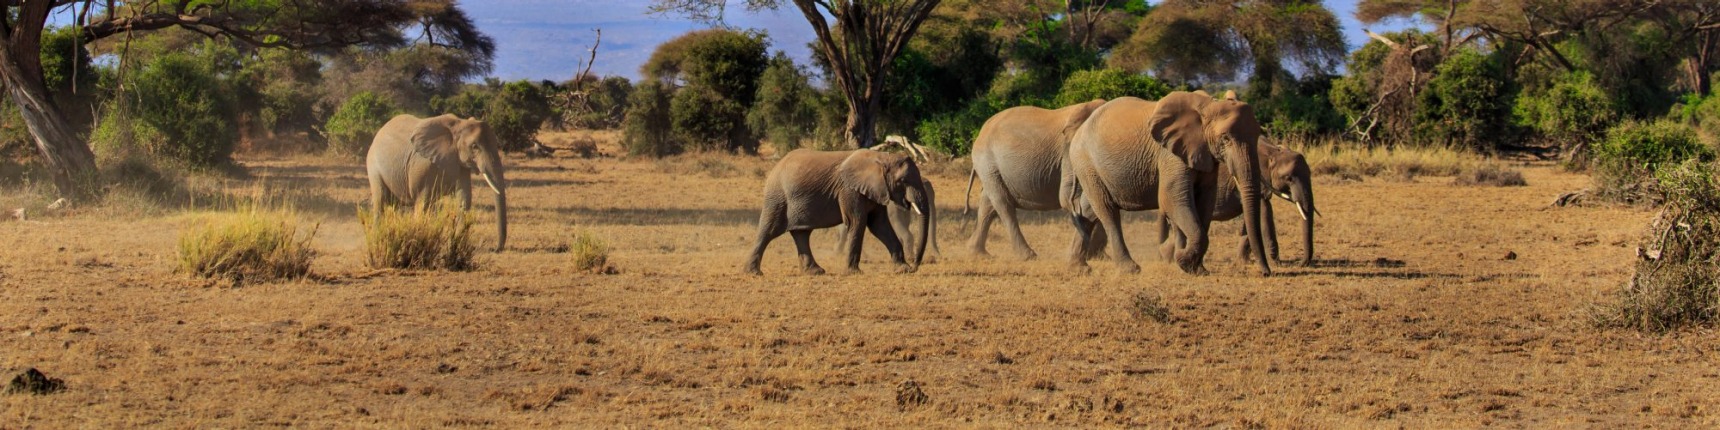 Kenya, elephants